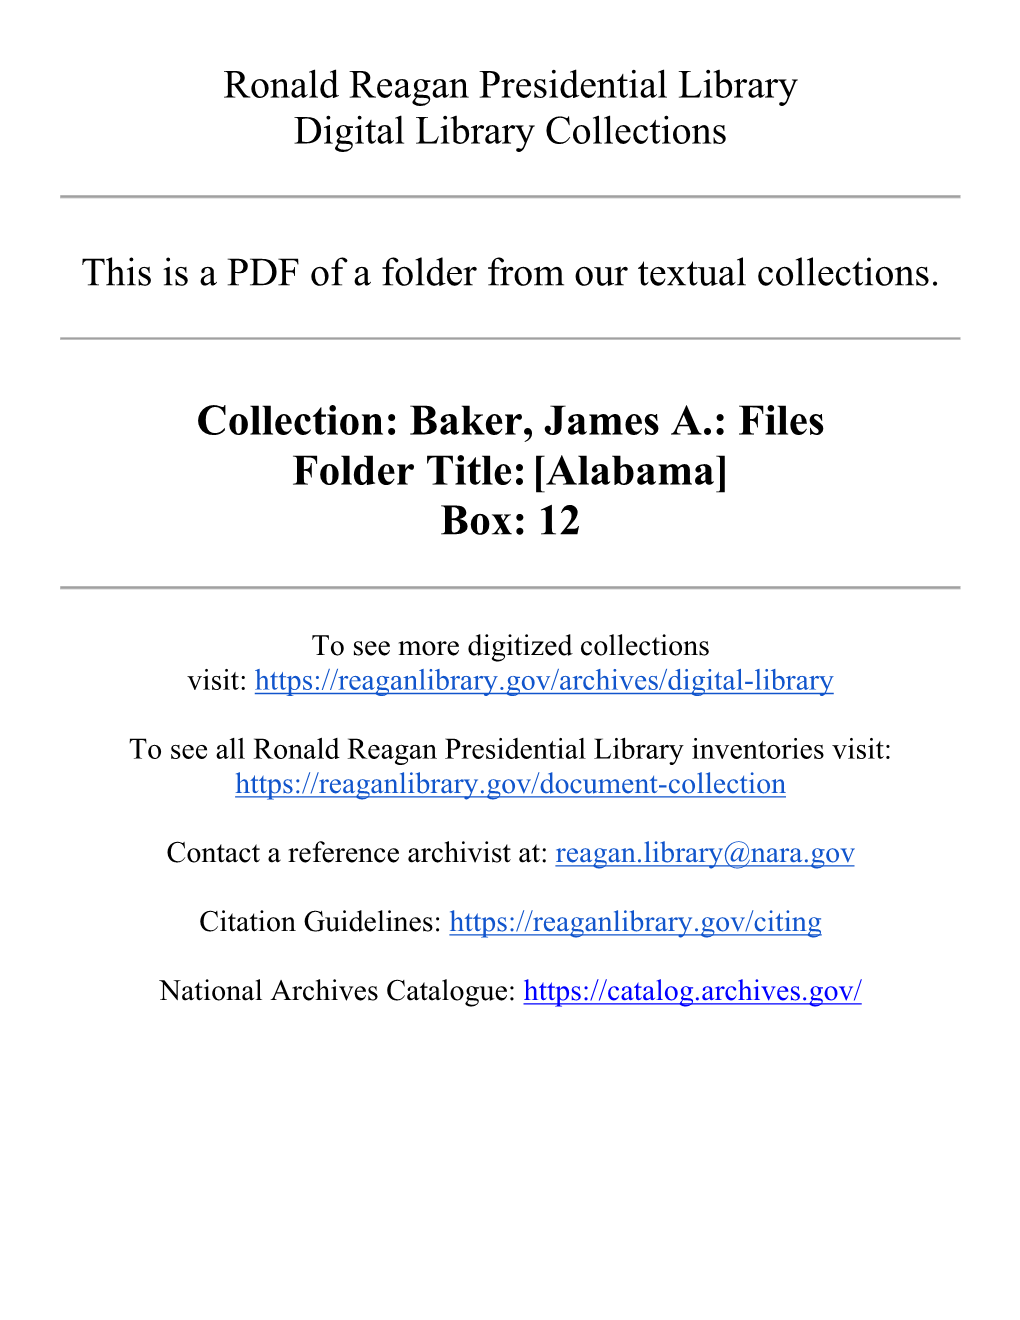 Baker, James A.: Files Folder Title:[Alabama]